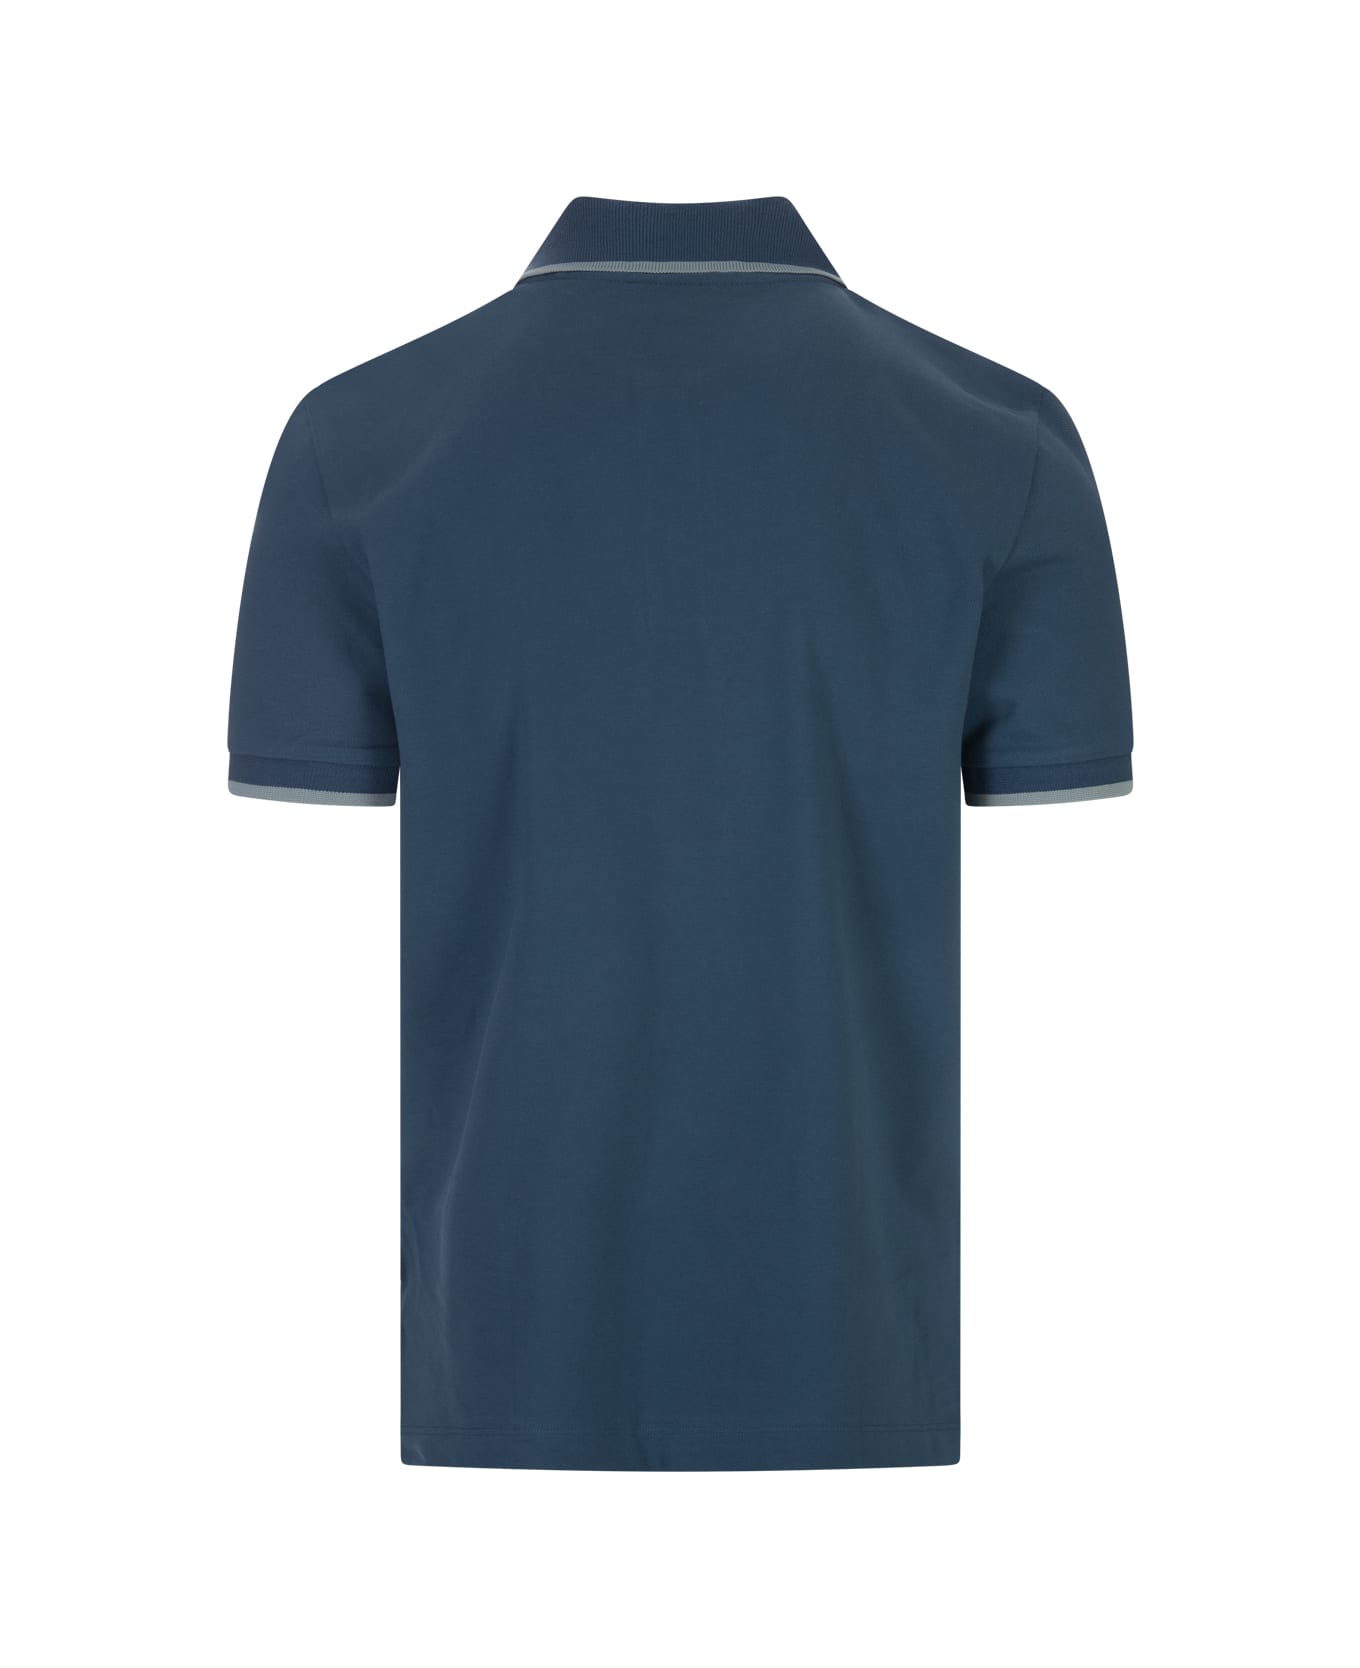 Hugo Boss Avio Blue Slim Fit Polo Shirt With Striped Collar - Blue